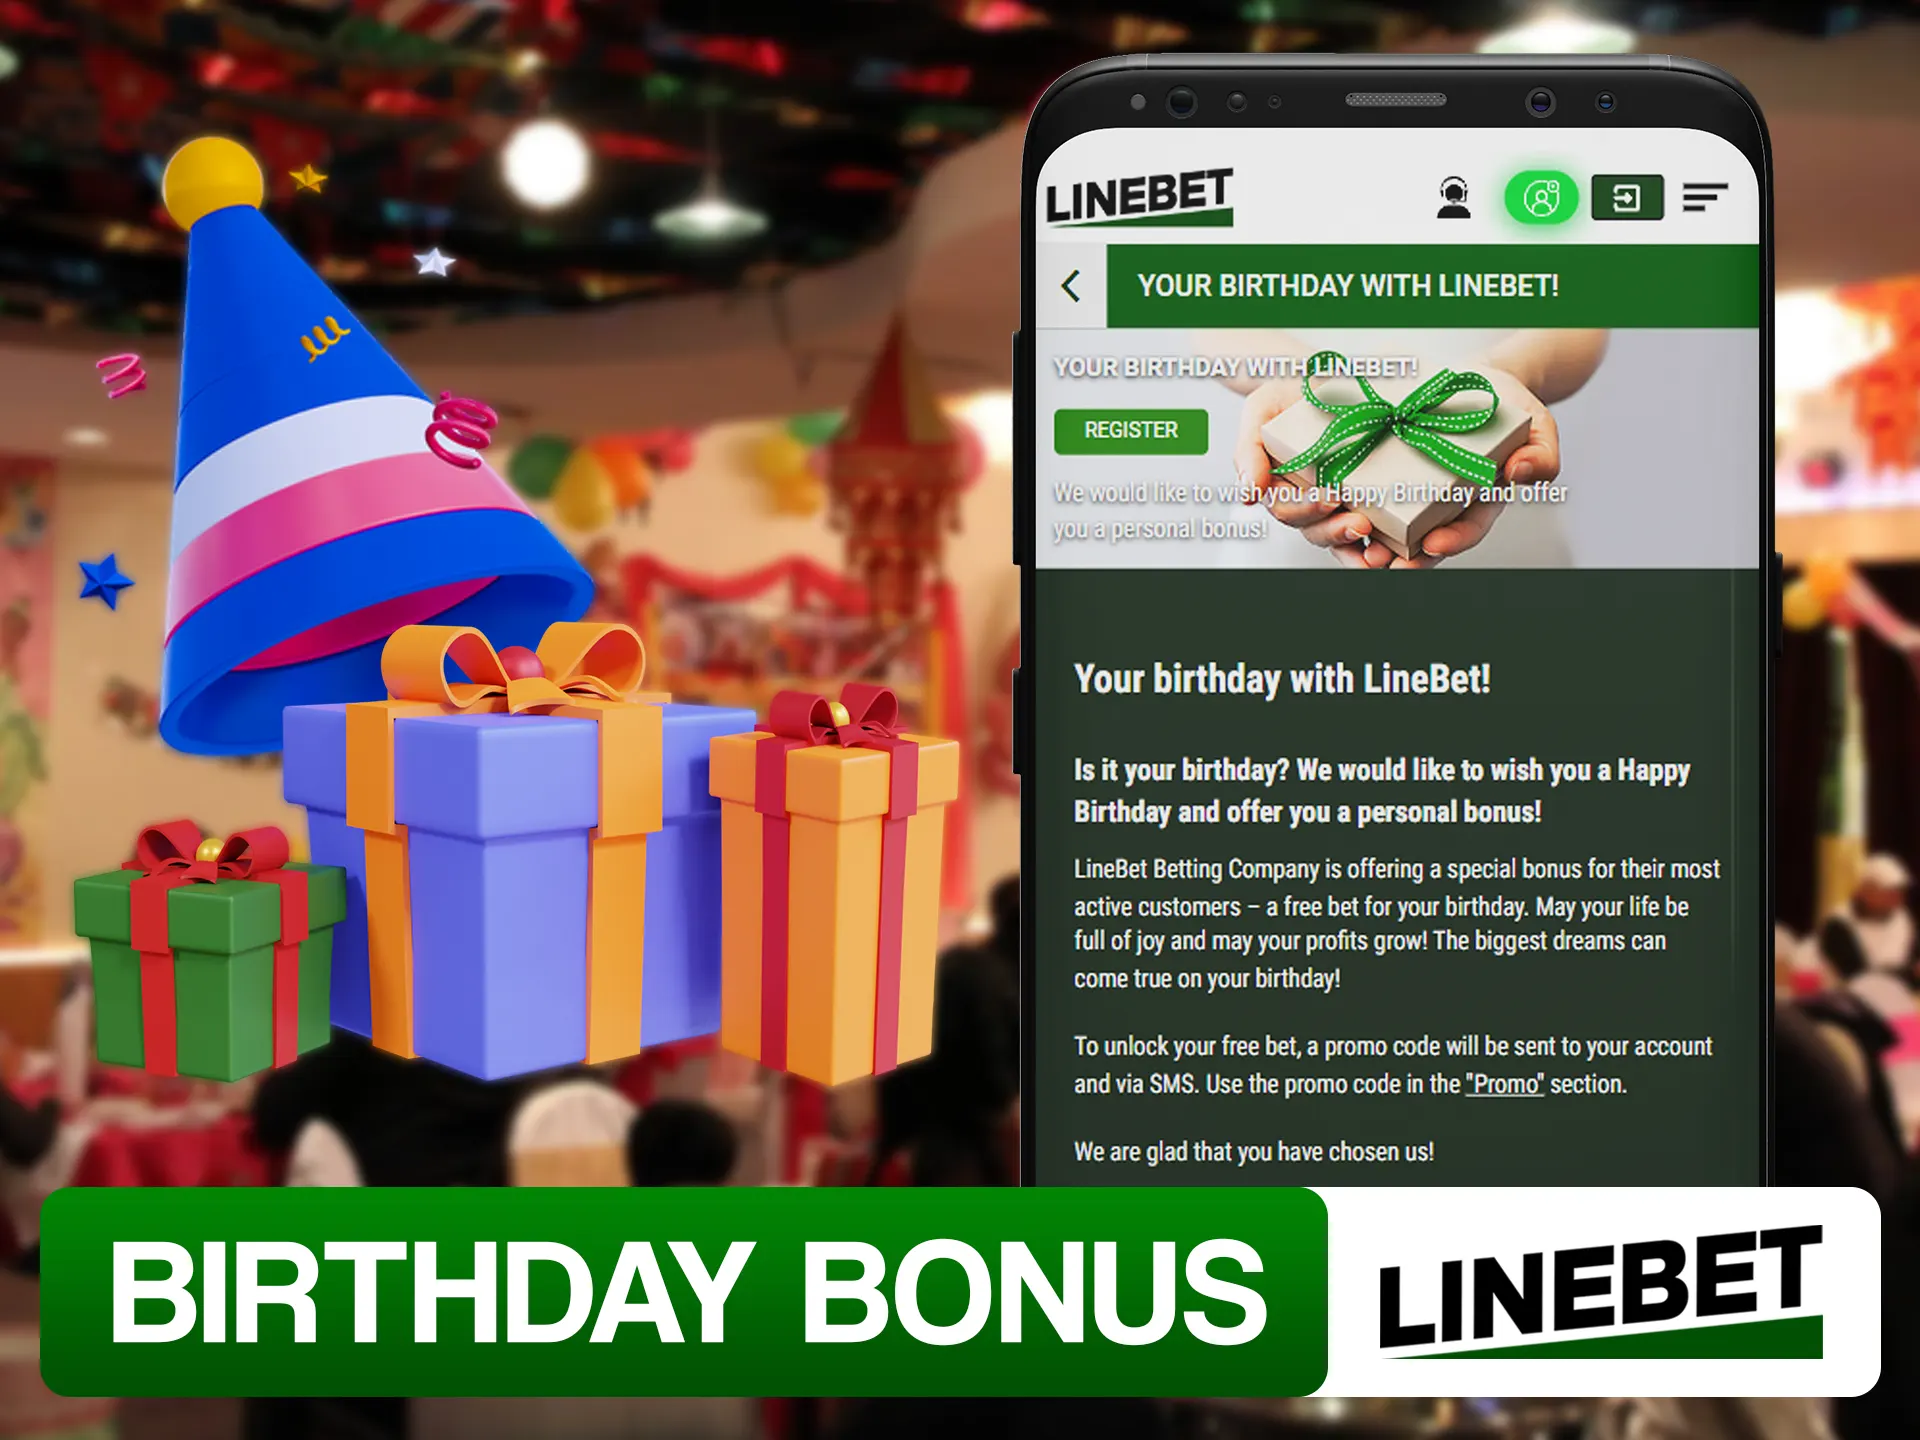 Get special Linebet birthday bonus on your birthday.